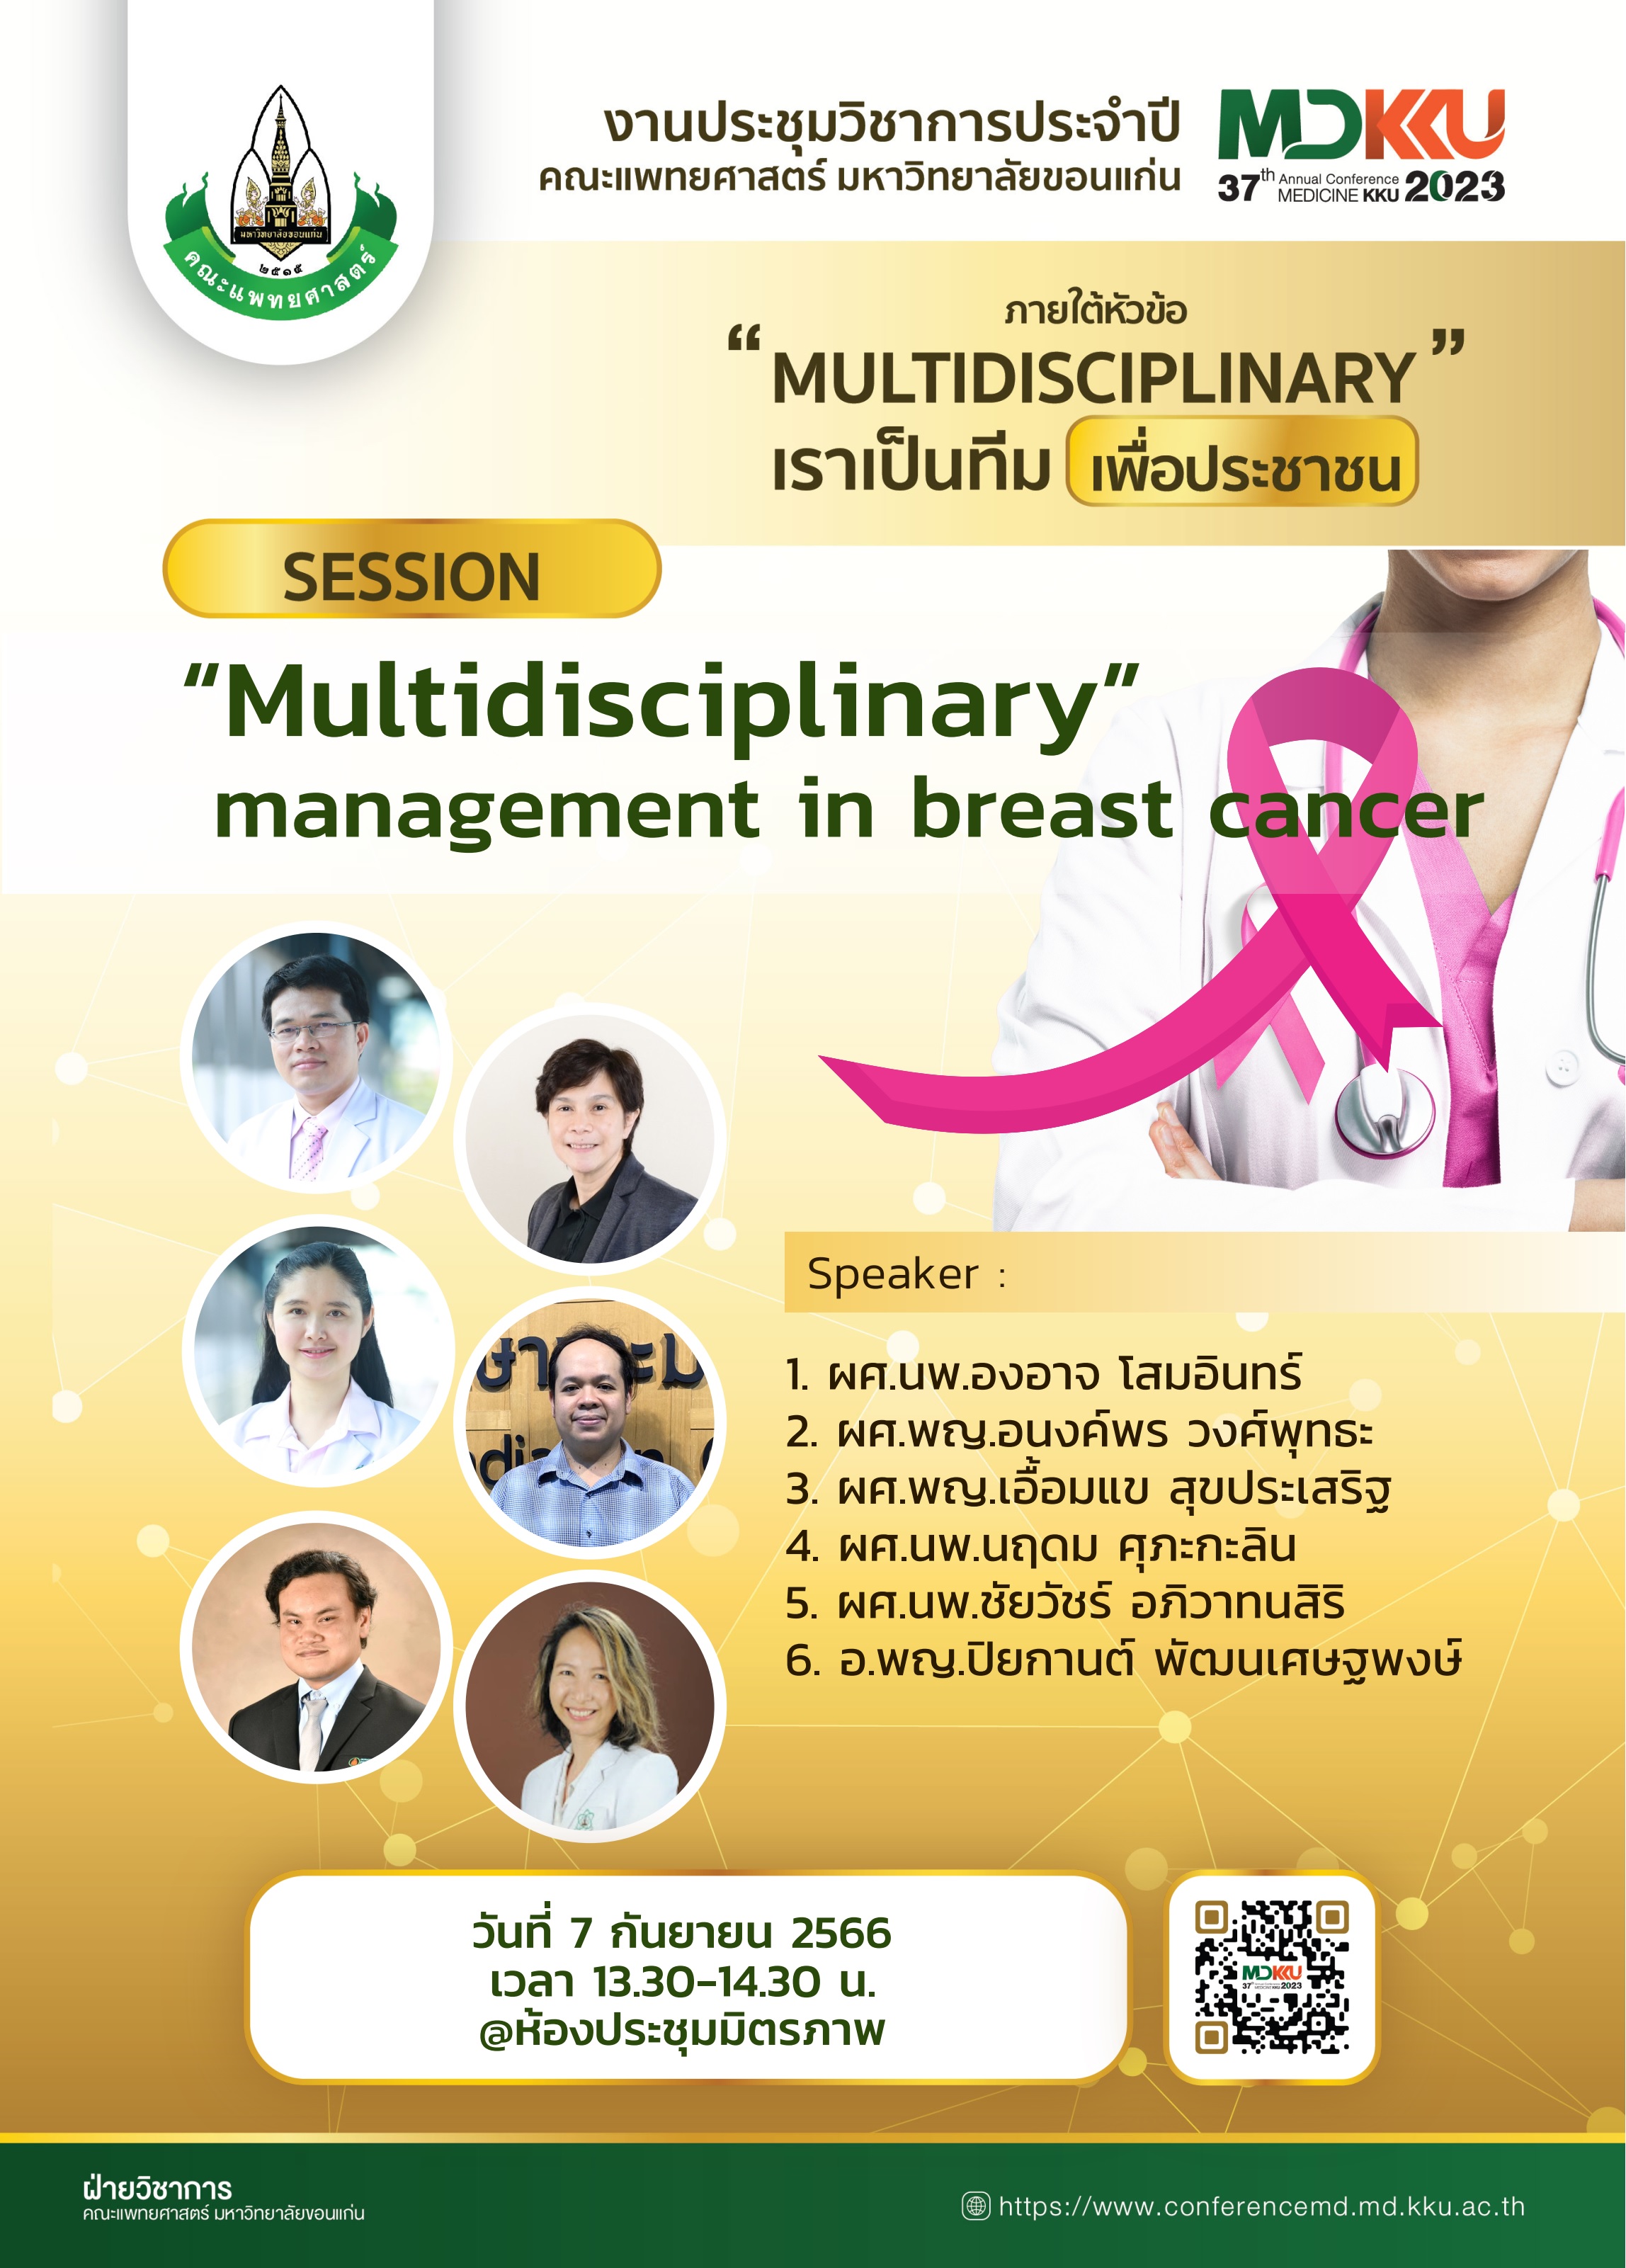 Multidisciplinary management in breast cancer